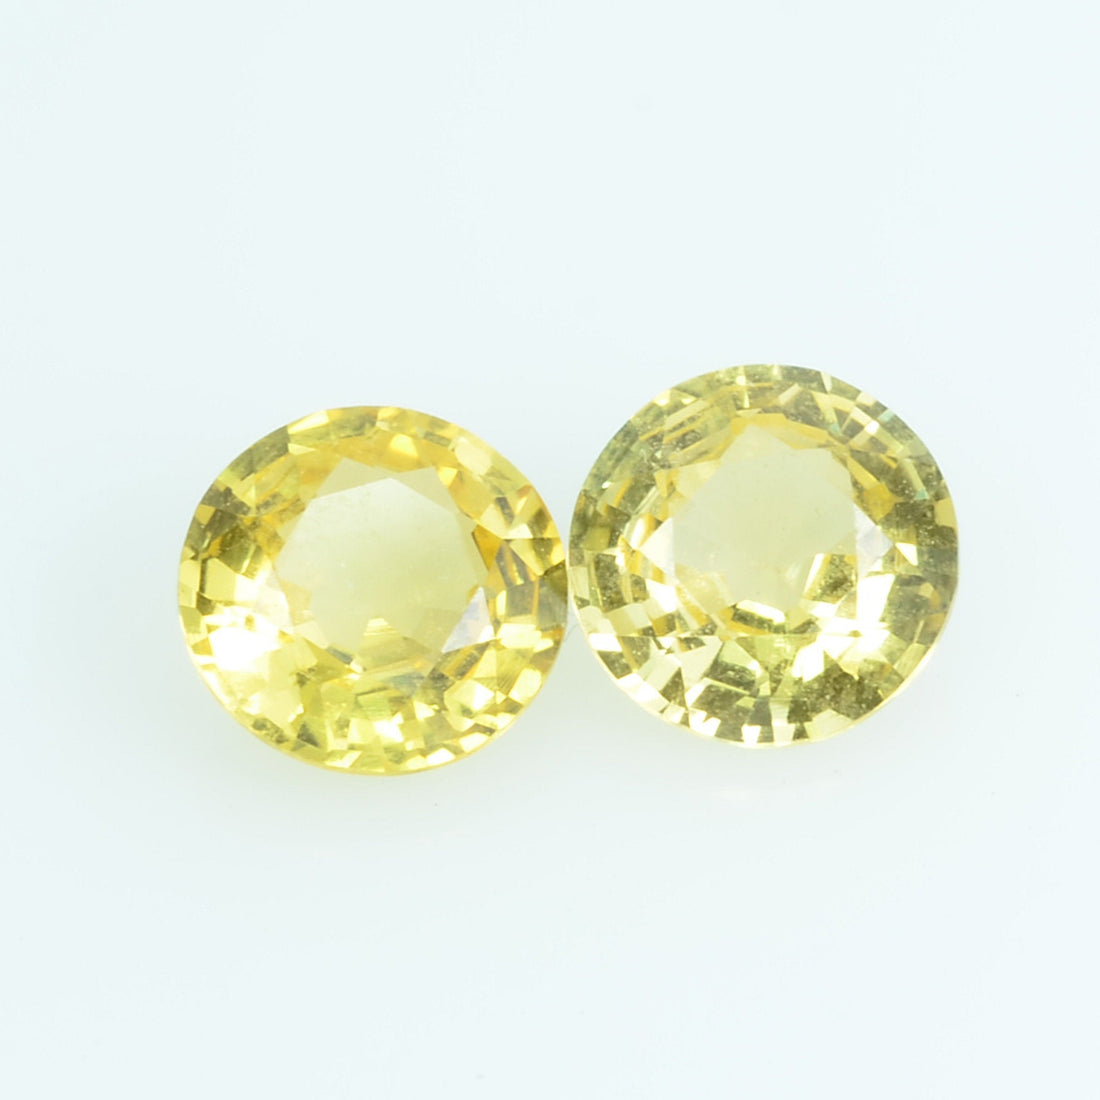 5.2 mm Natural Yellow Sapphire Loose Gemstone Round Cut